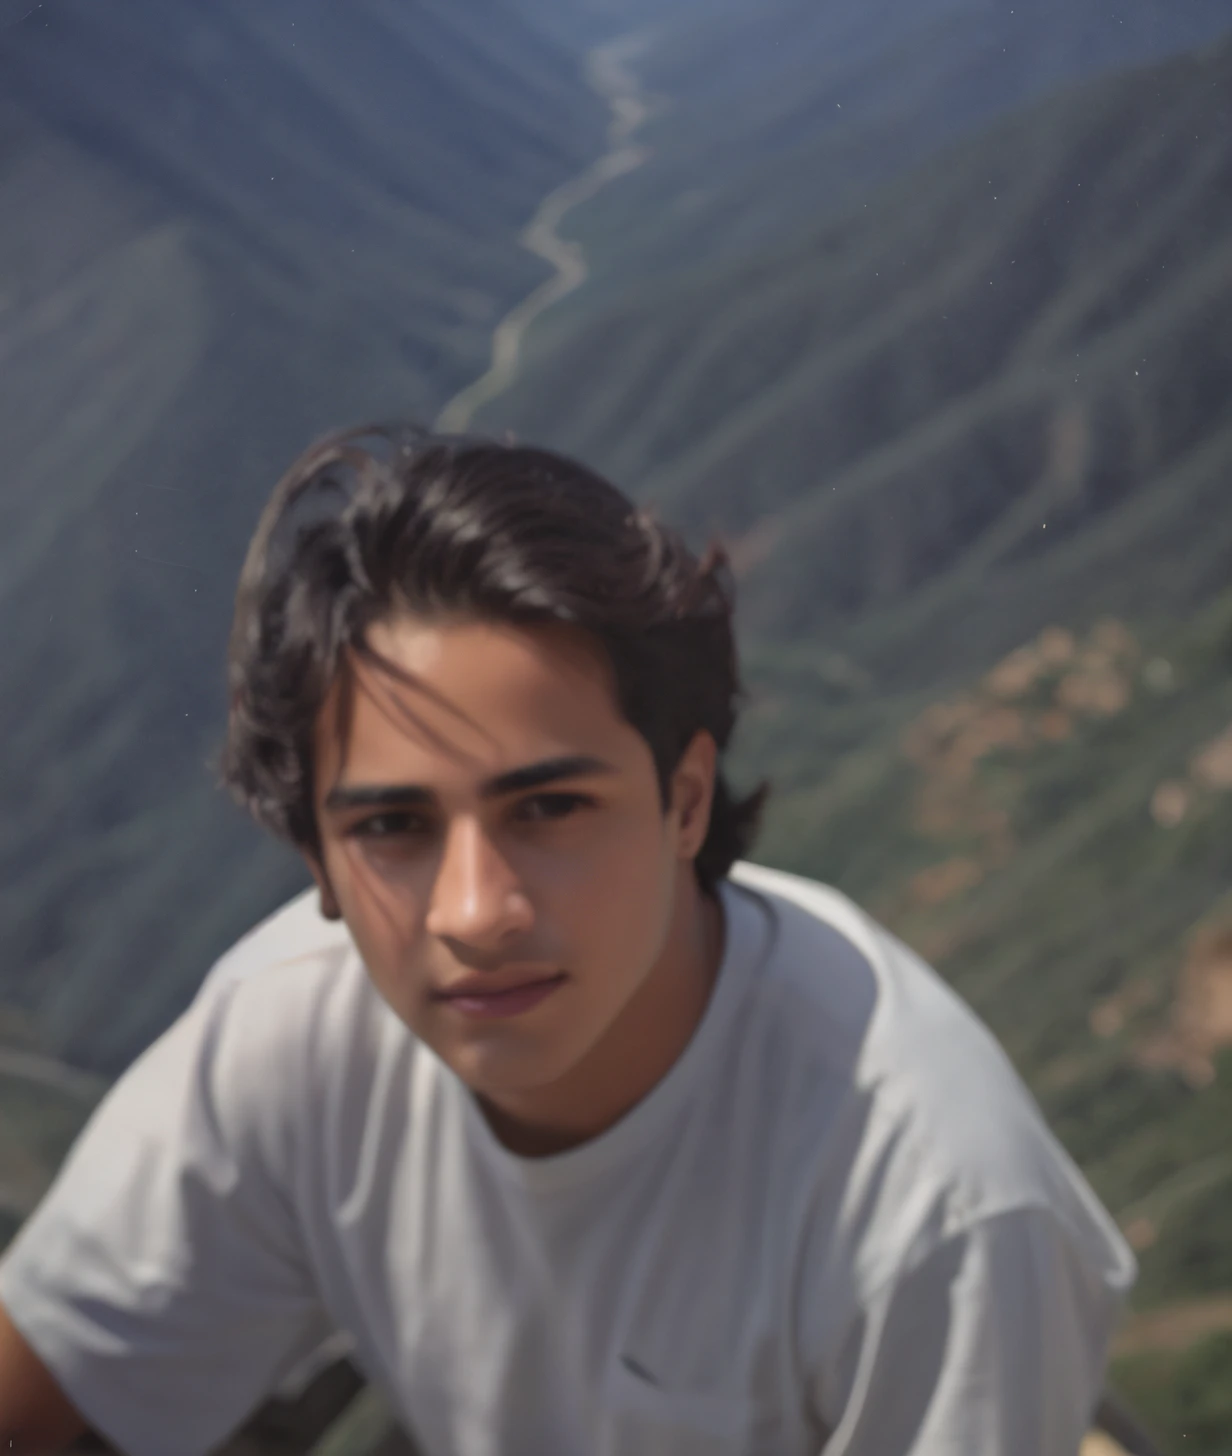 Adolescente sentados 在山頂上 com vista para o vale, 在山上, 在山頂上, 在山里, 在山頂上, 在山頂上, 在山脈中, 攝於2000年代初期, 在悬崖上, 17岁左右, 棕色眼睛, 超寫實照片, 聚焦照片, 穿着白衬衫, 随意的